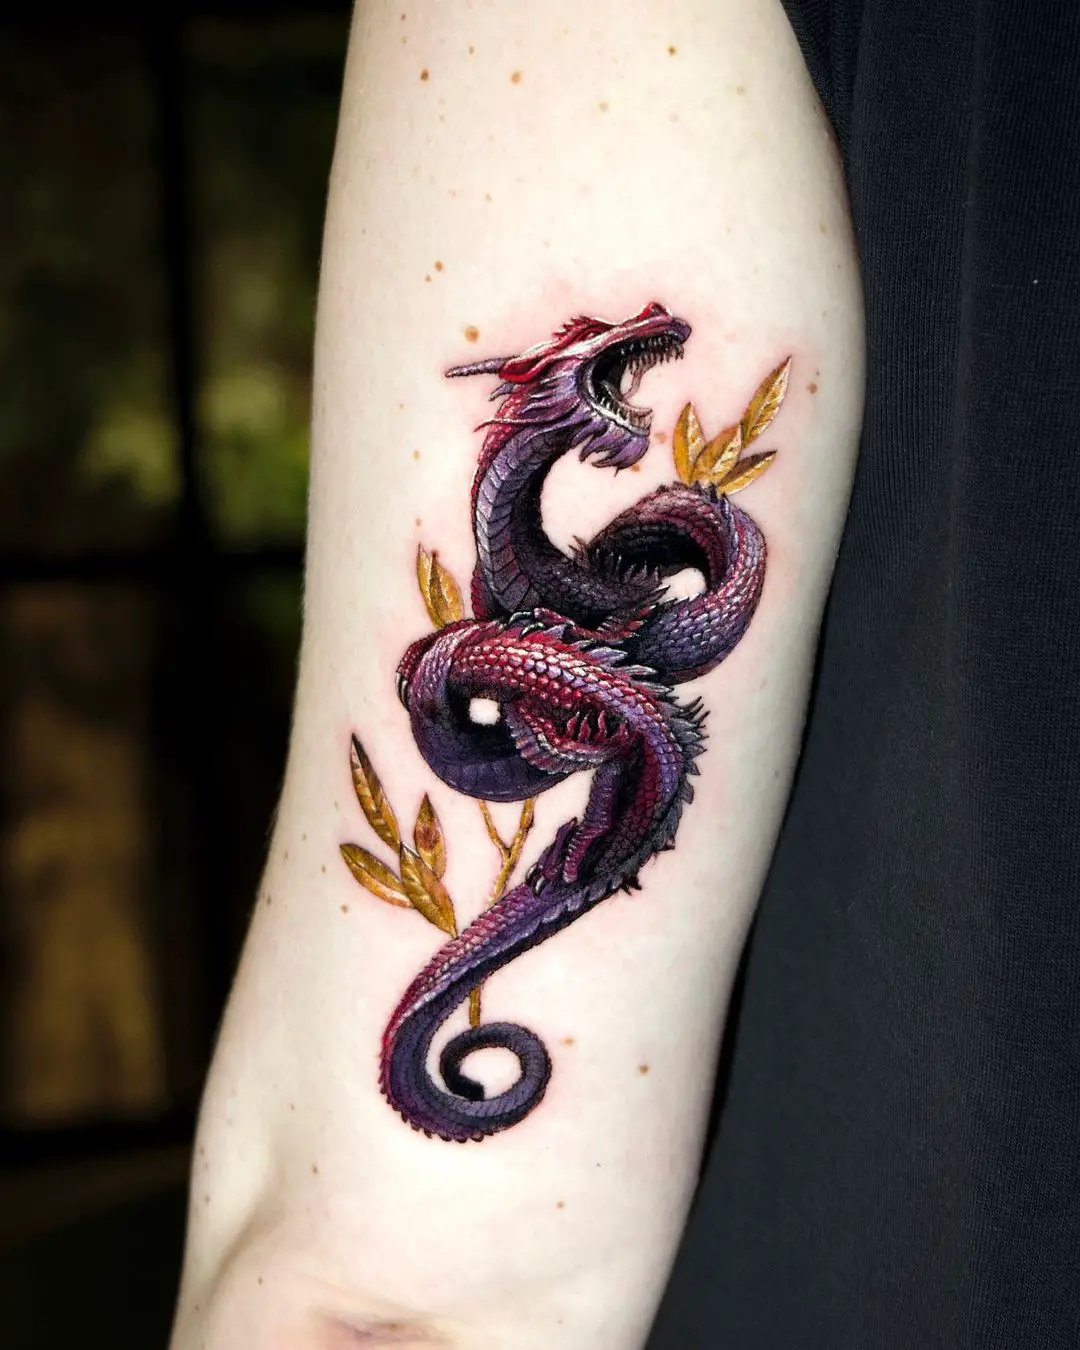 Firece dragon tattoo by ink.traveler